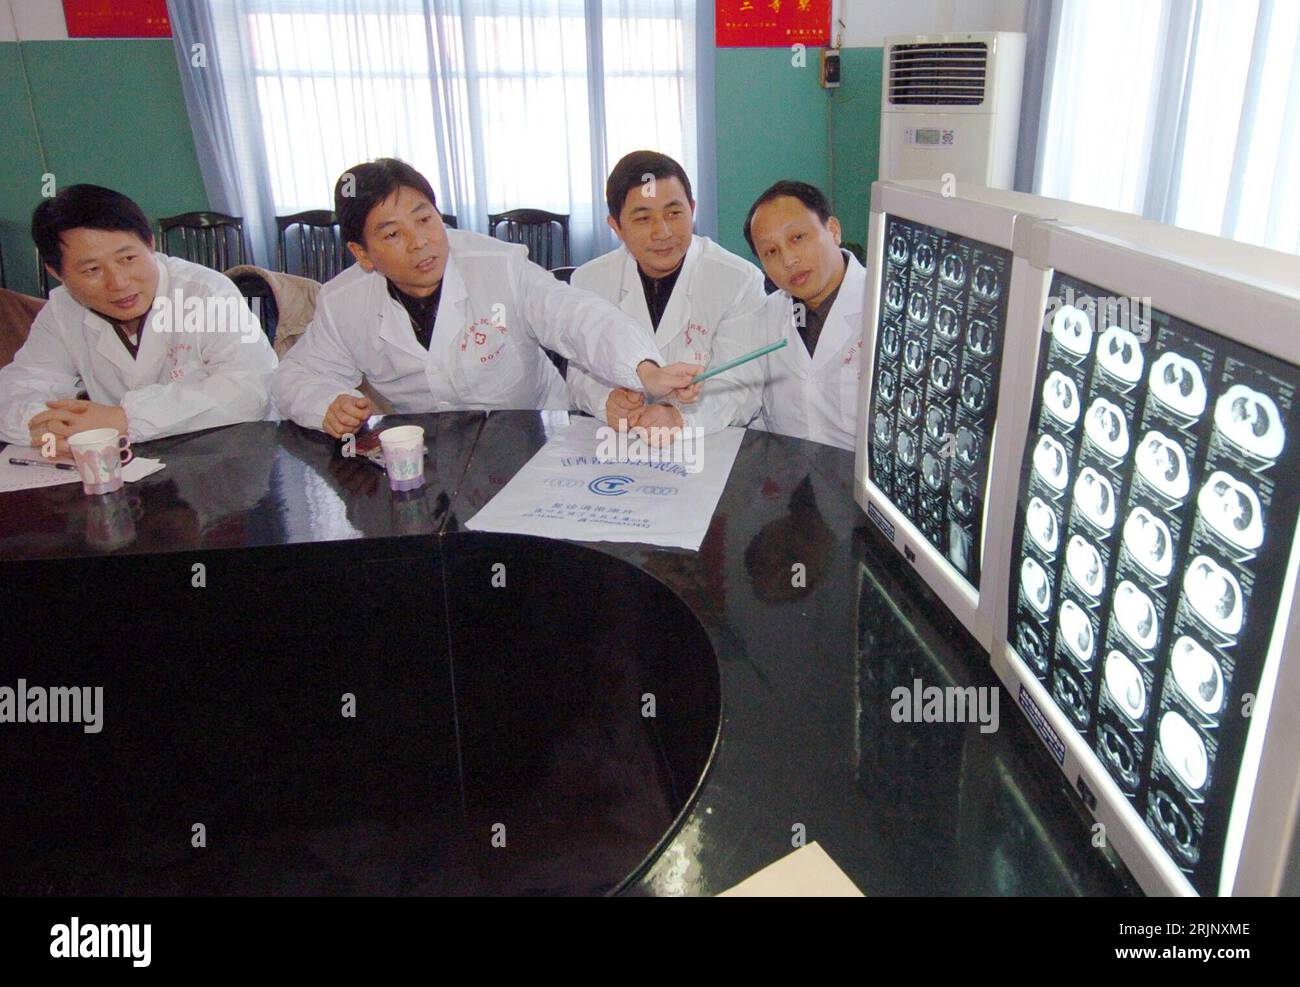 Bildnummer : 51033535 Datum : 17.12.2005 Copyright : imago/Xinhua Mediziner erläutert anhand von Röntgenaufnahmen seinen Kollegen den jüngsten Fall der Erkrankung eines Menschen am H5N1-virus in Shangxi - PUBLICATIONxNOTxINxCHN, Personen ; 2005, Suichuan, Provinz Jiangxi, Vogelgrippe, Vogelseuche, Epidemie, Epidemien, Seuche, Seuchen, Seuchengefahr, Seuchengefahren, Vogelkrankheit, Vogel-virus, Vogelgrippevirus, Grippevirus, Arzt, Ärzte, bératen, Beratung, beratend, Gespräch, Gespräche, Röntgenbild, Röntgenbilder, Röntgenaufnahme, Röntgenaufnahmen, Leuchtkasten; quer, Kbdig, Gruppenbild, Chine Banque D'Images